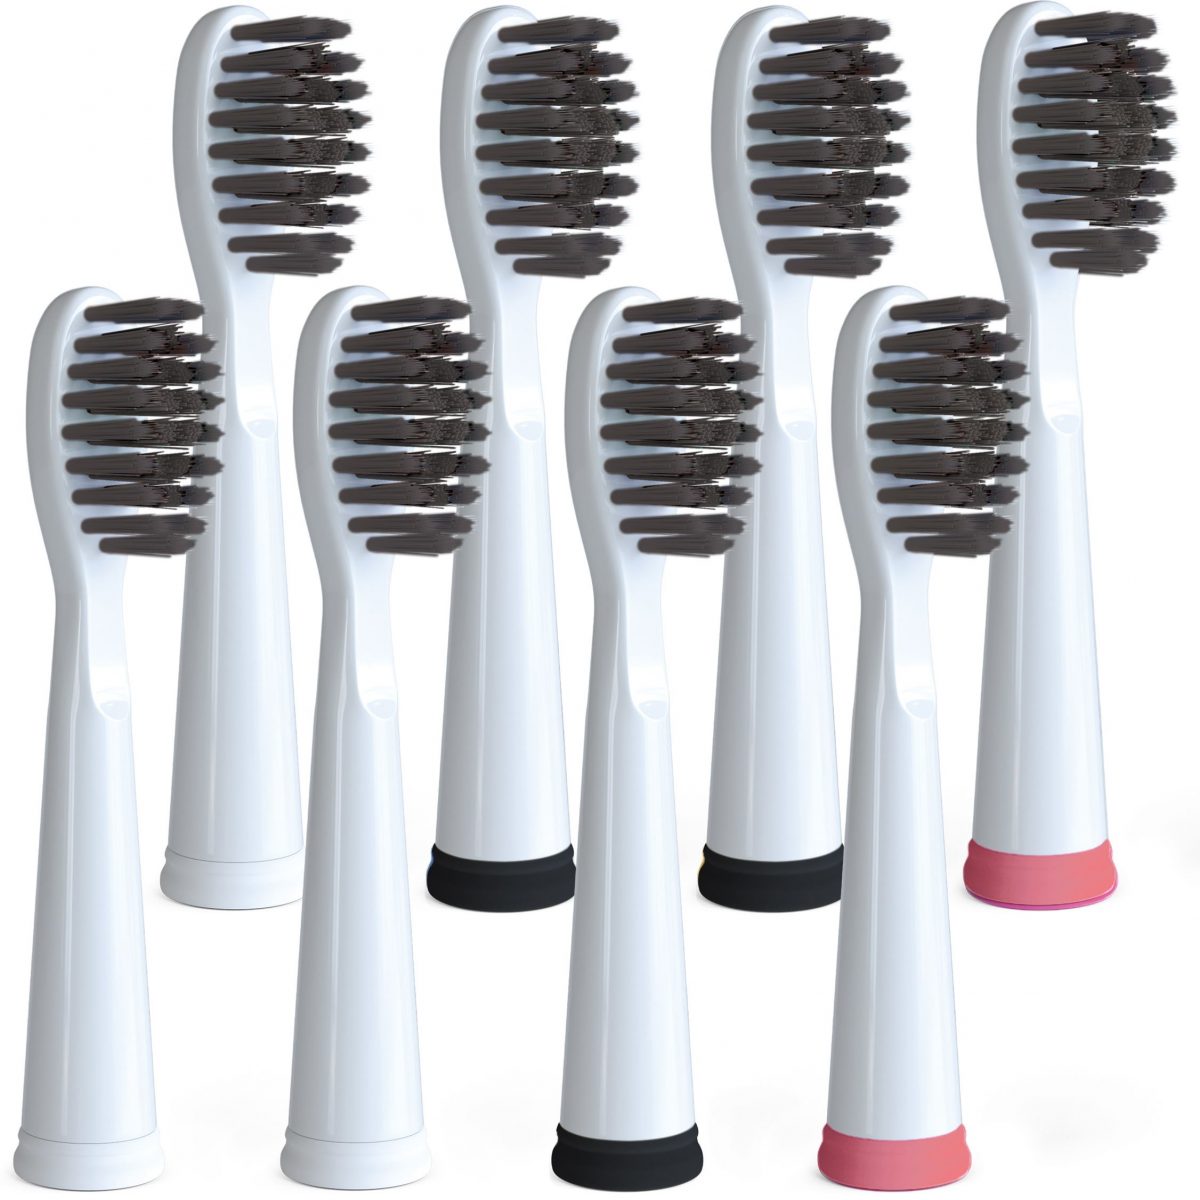 Sonic-FX charcoal brush heads (8 pack white)